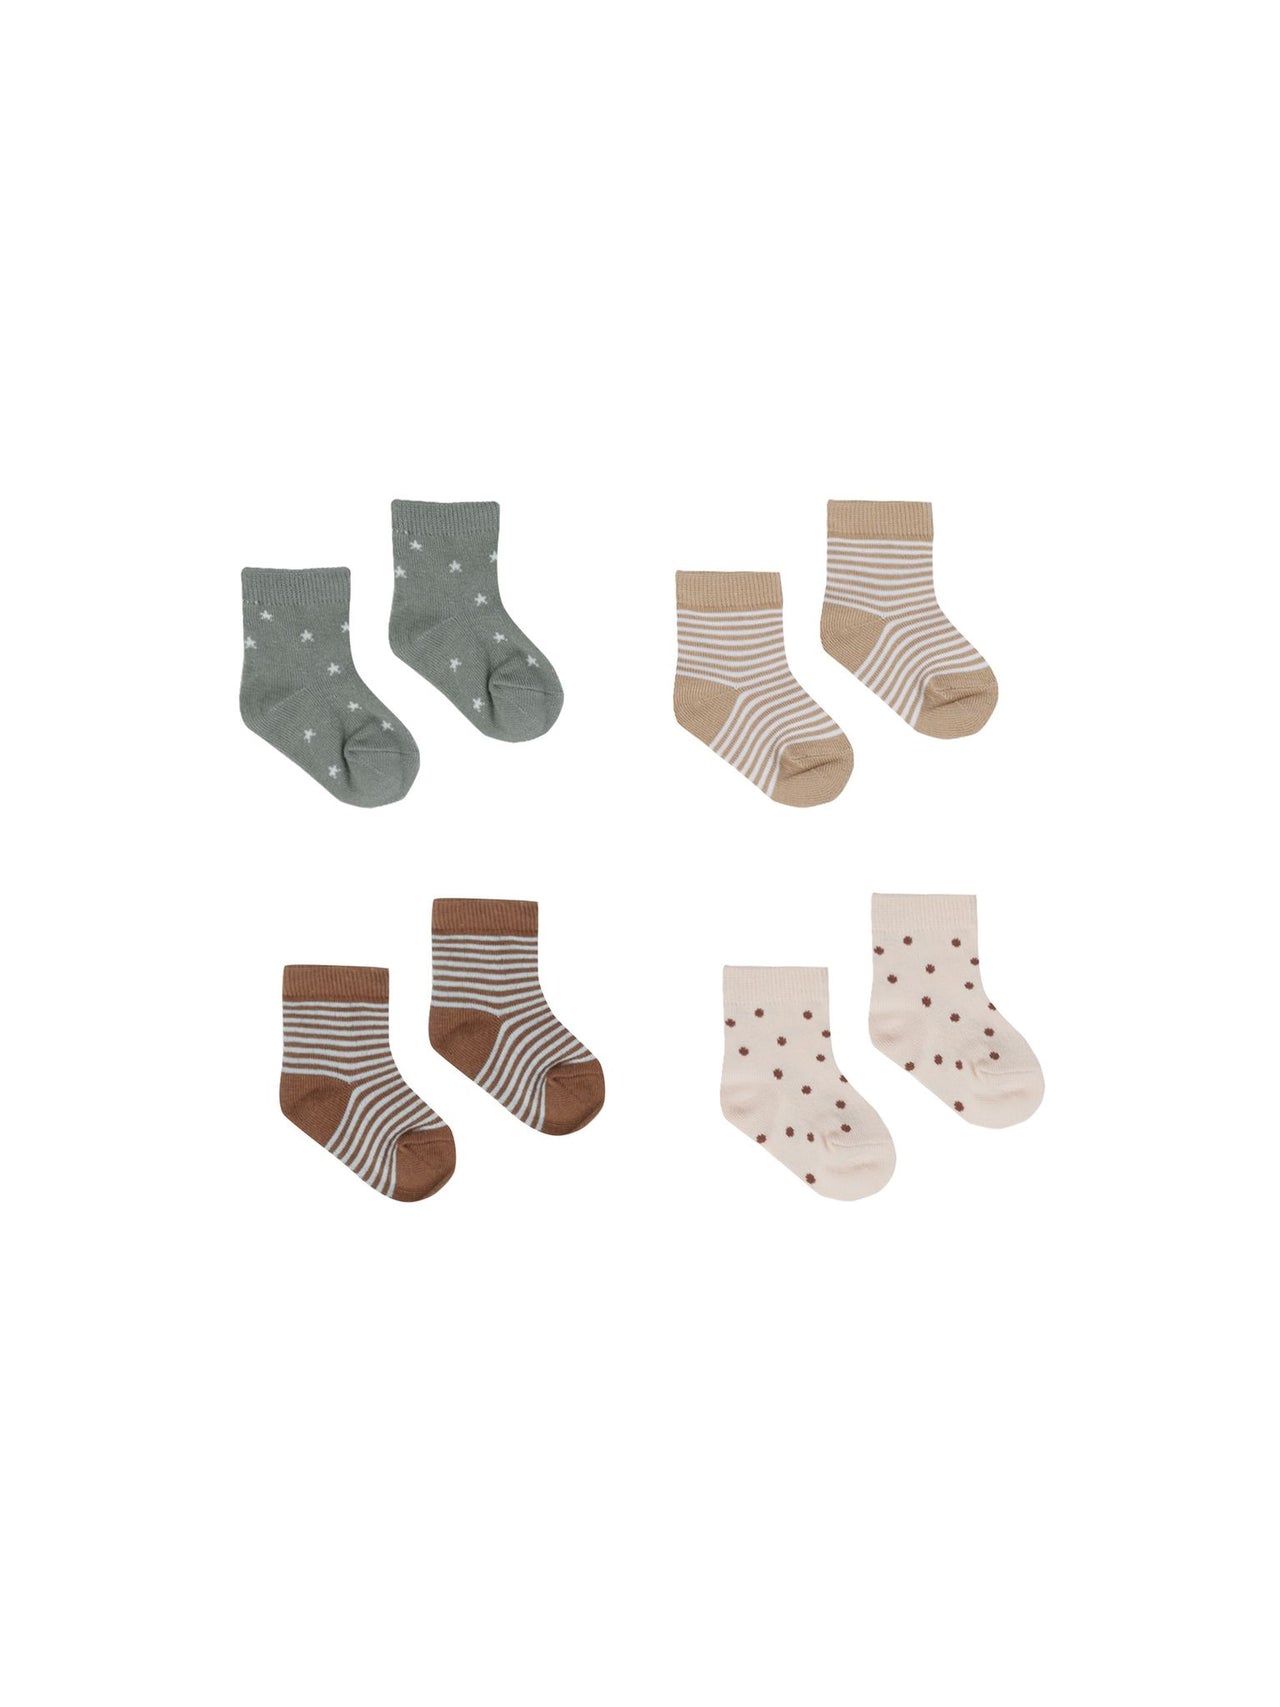 Quincy Mae Printed Sock Set, Latte Stripe, Stars, Dots, Sienna Sky